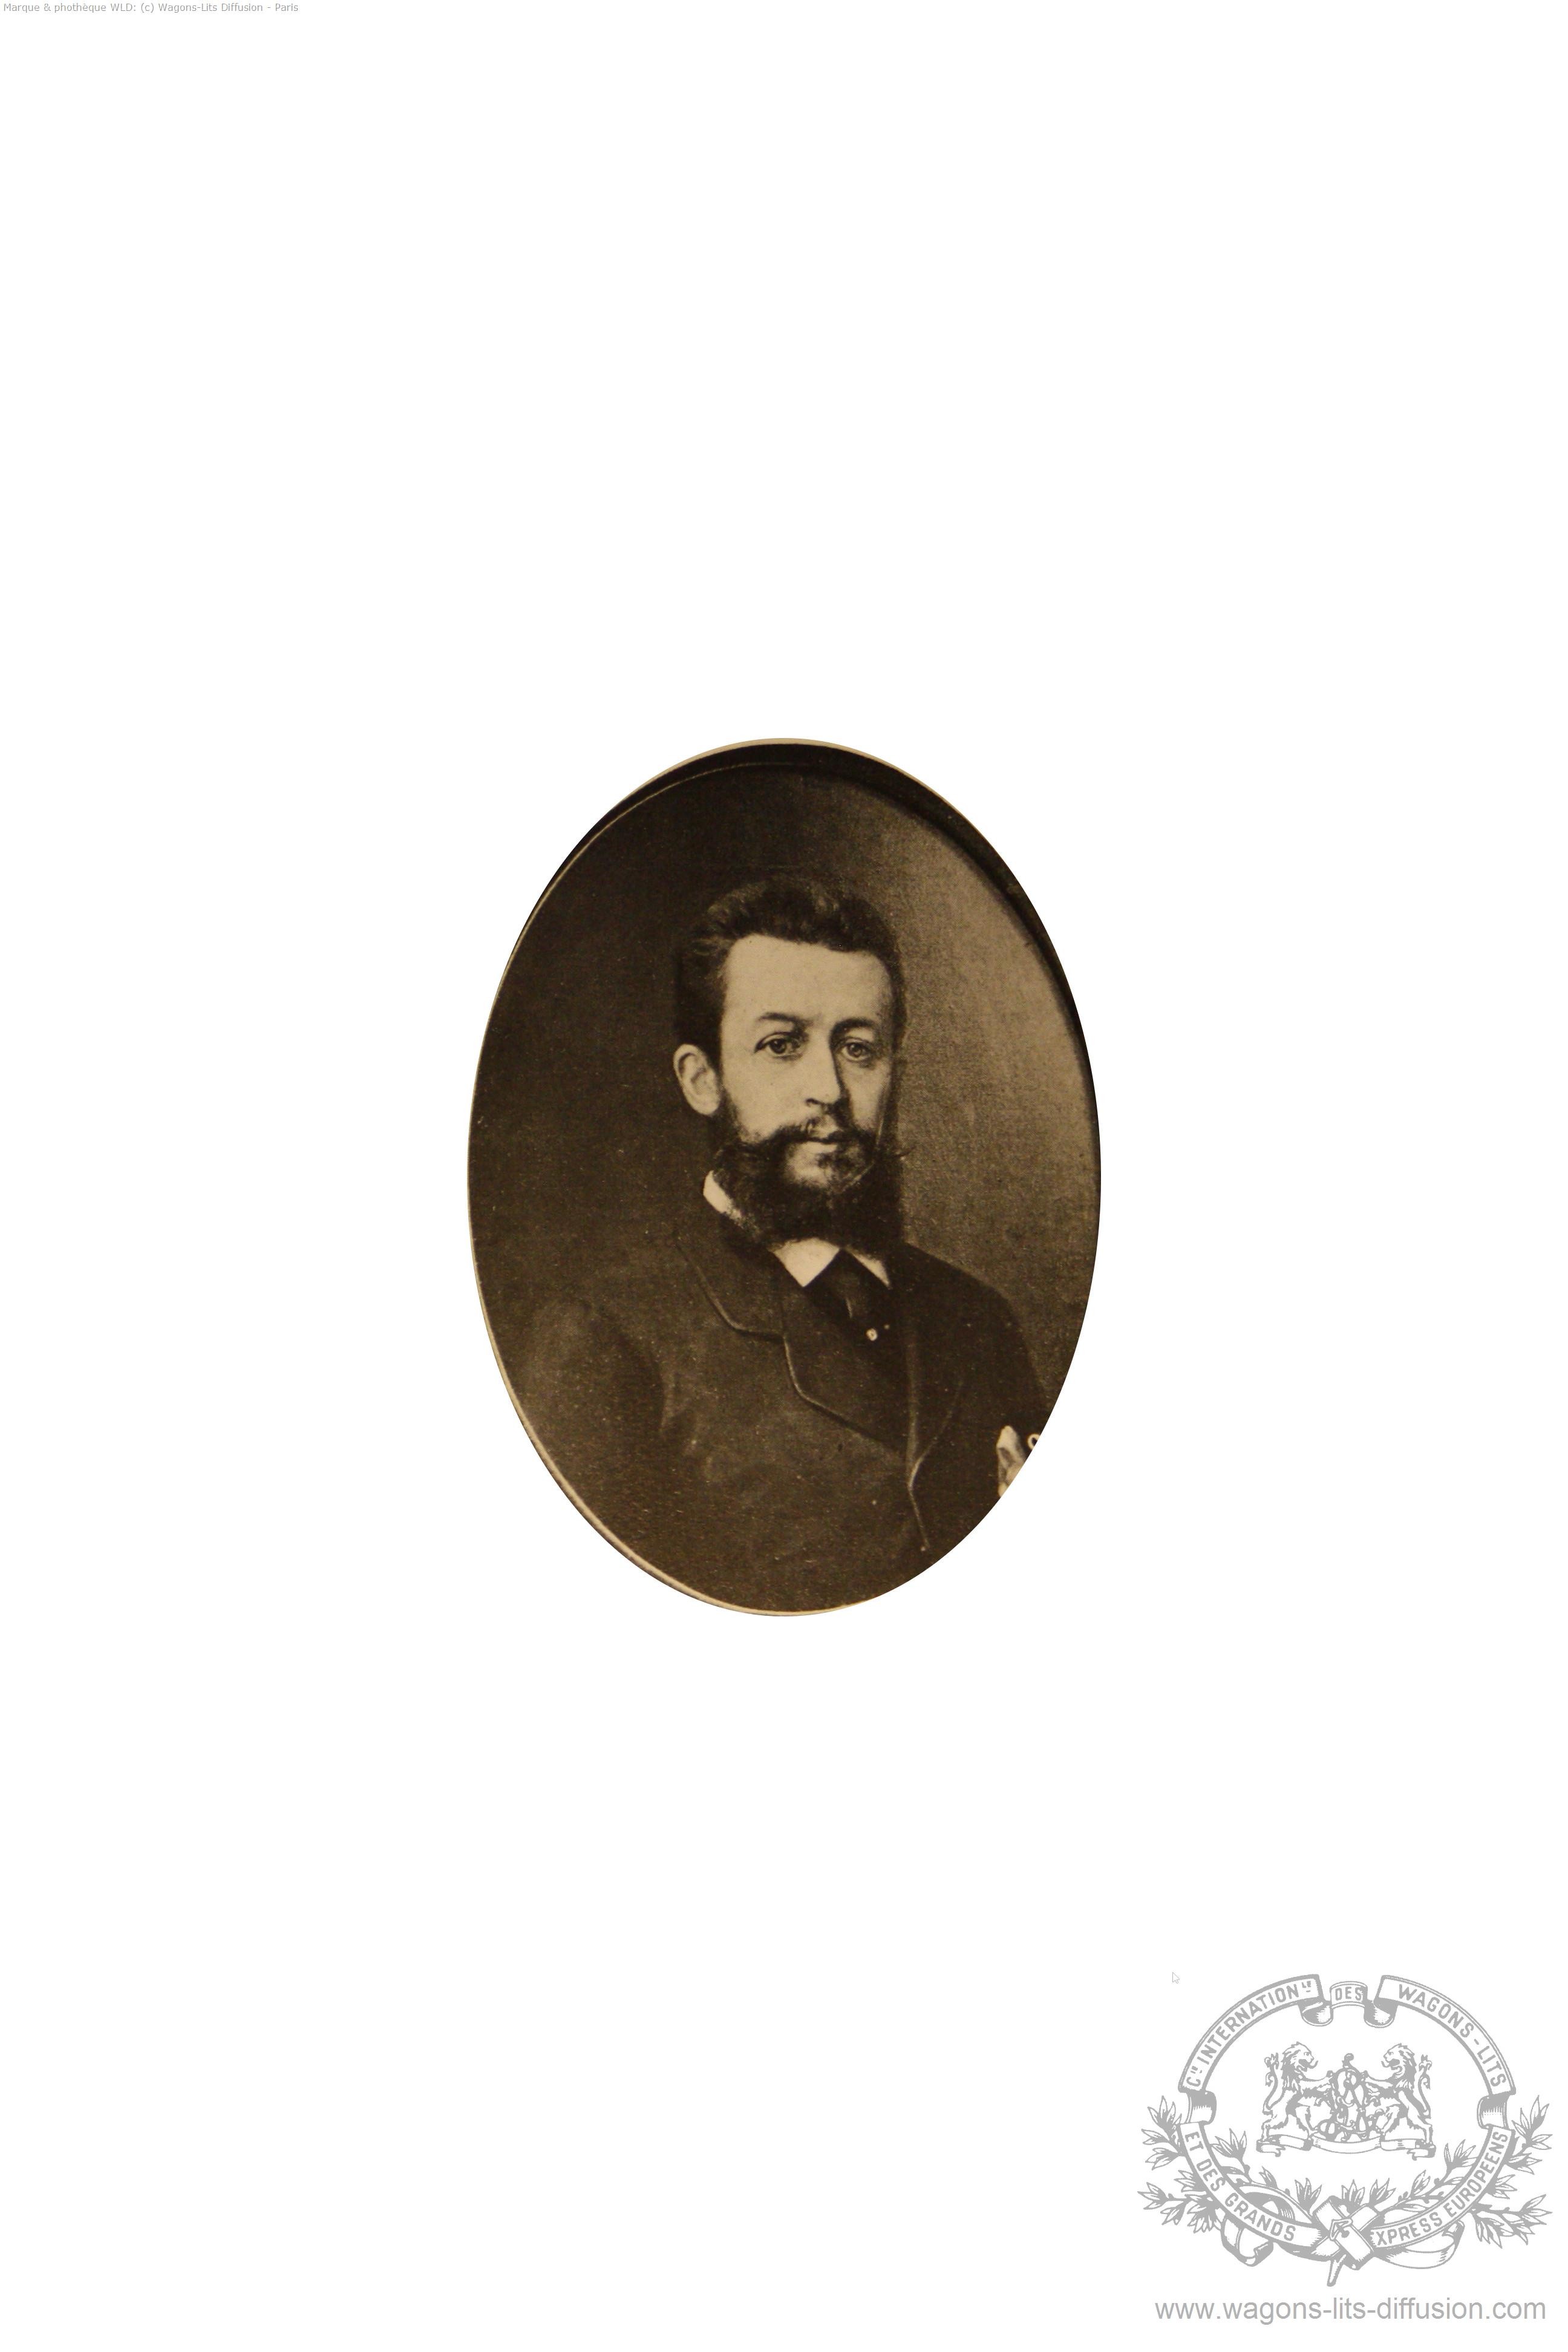 Wl nagelmackers portrait ovale vers 1880